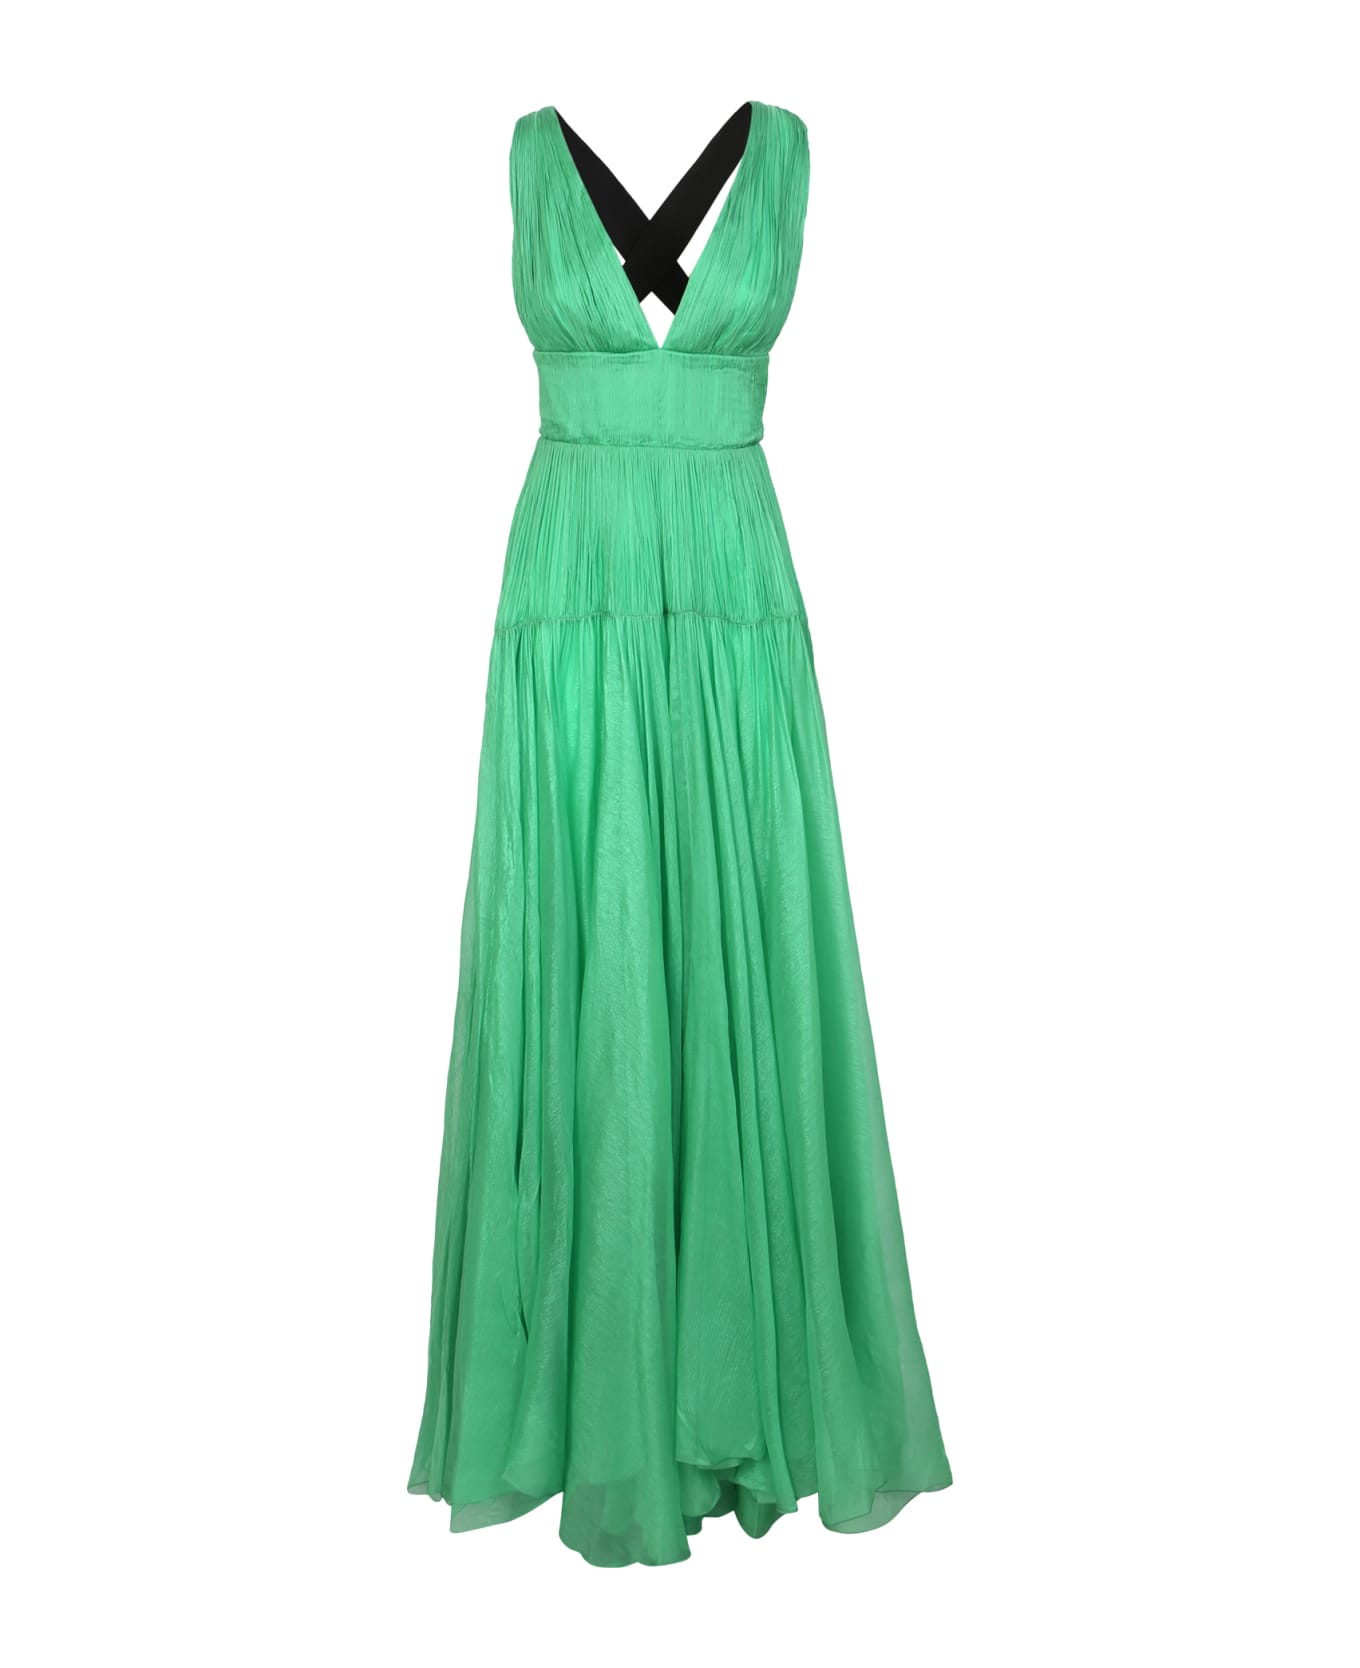 Maria Lucia Hohan Green Calliope Dress - Green